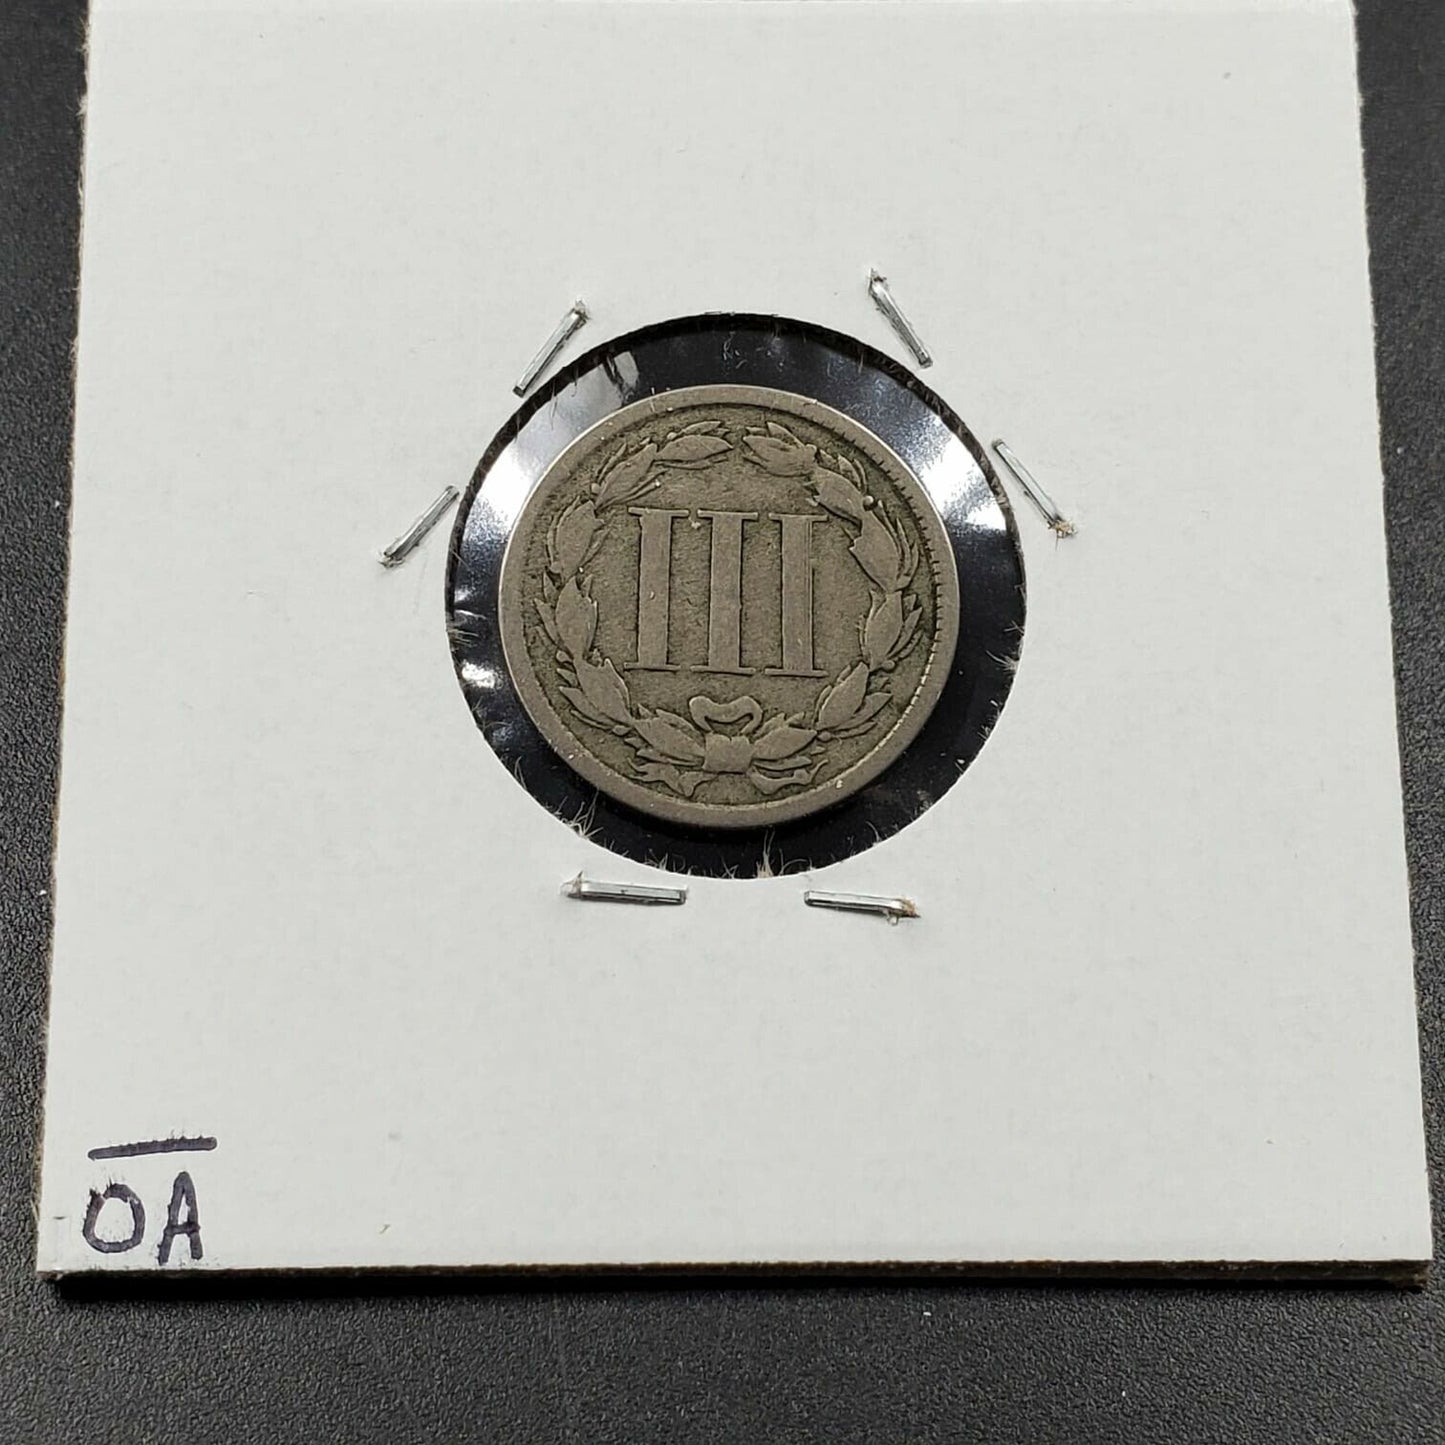 1865 P 3c Liberty Three Cent Nickel Coin AVG Circulated Die CUDD Error Coin